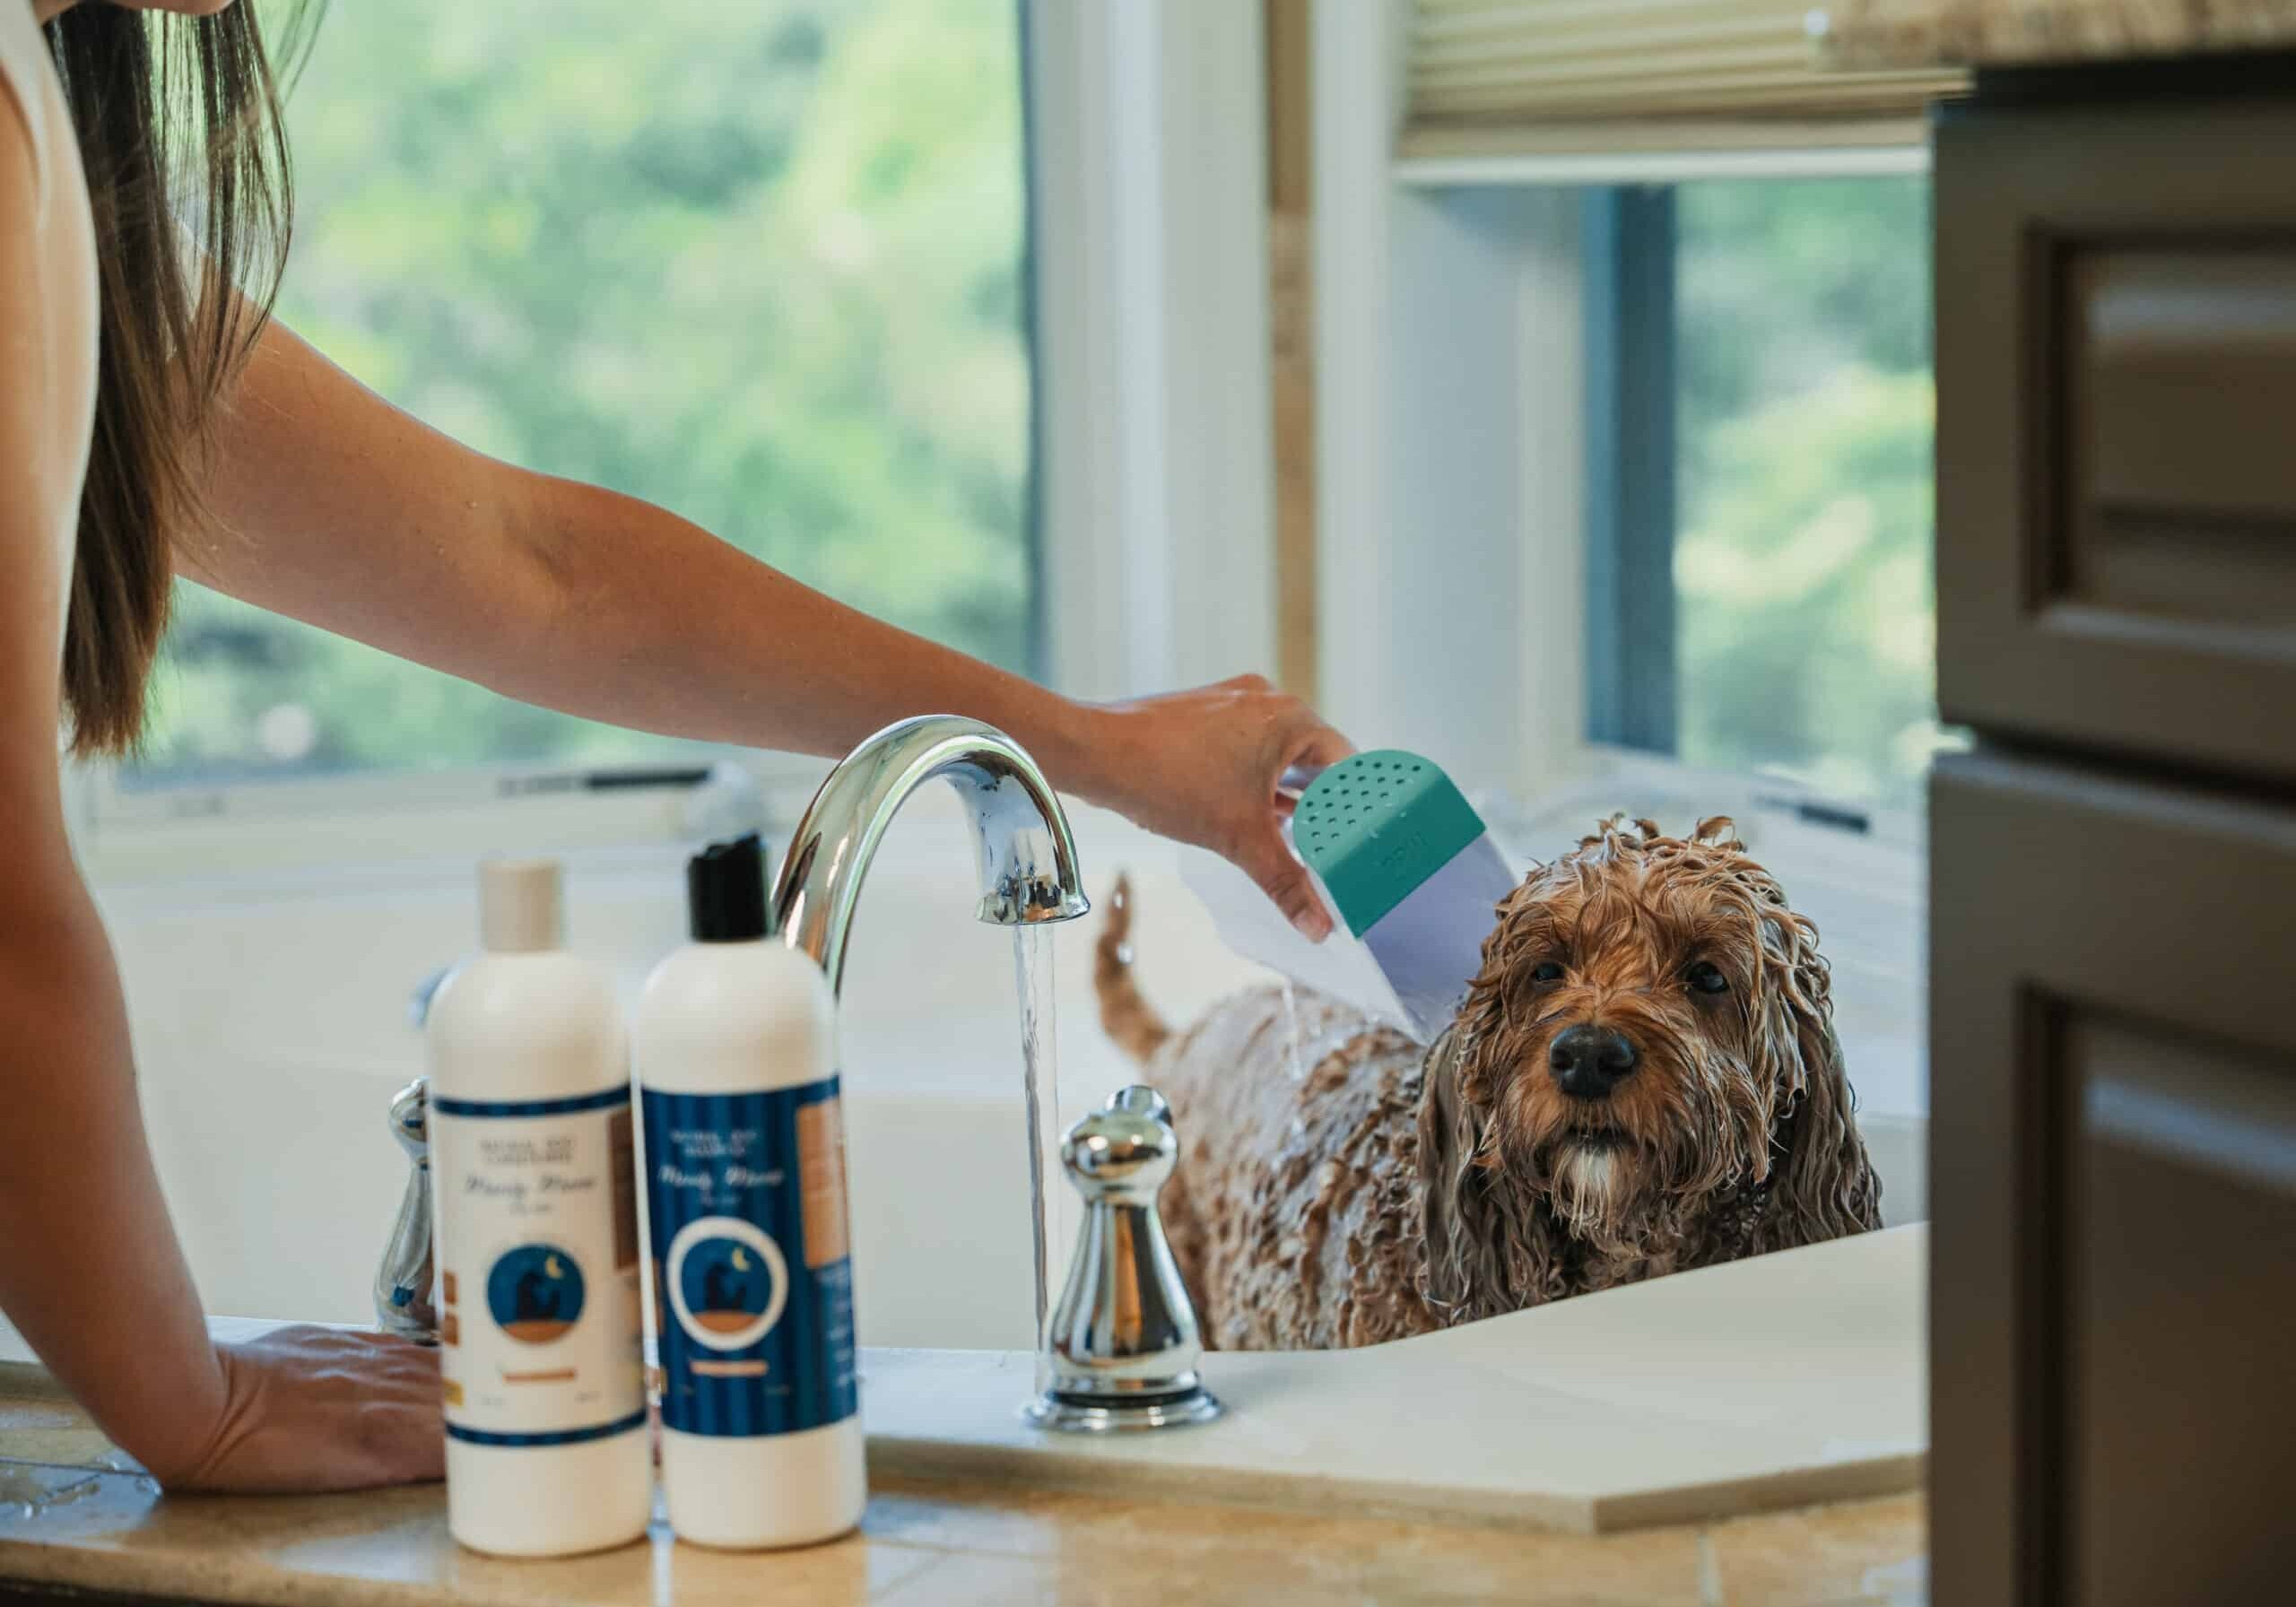 Manly Mane natural dog shampoo scrub and rub